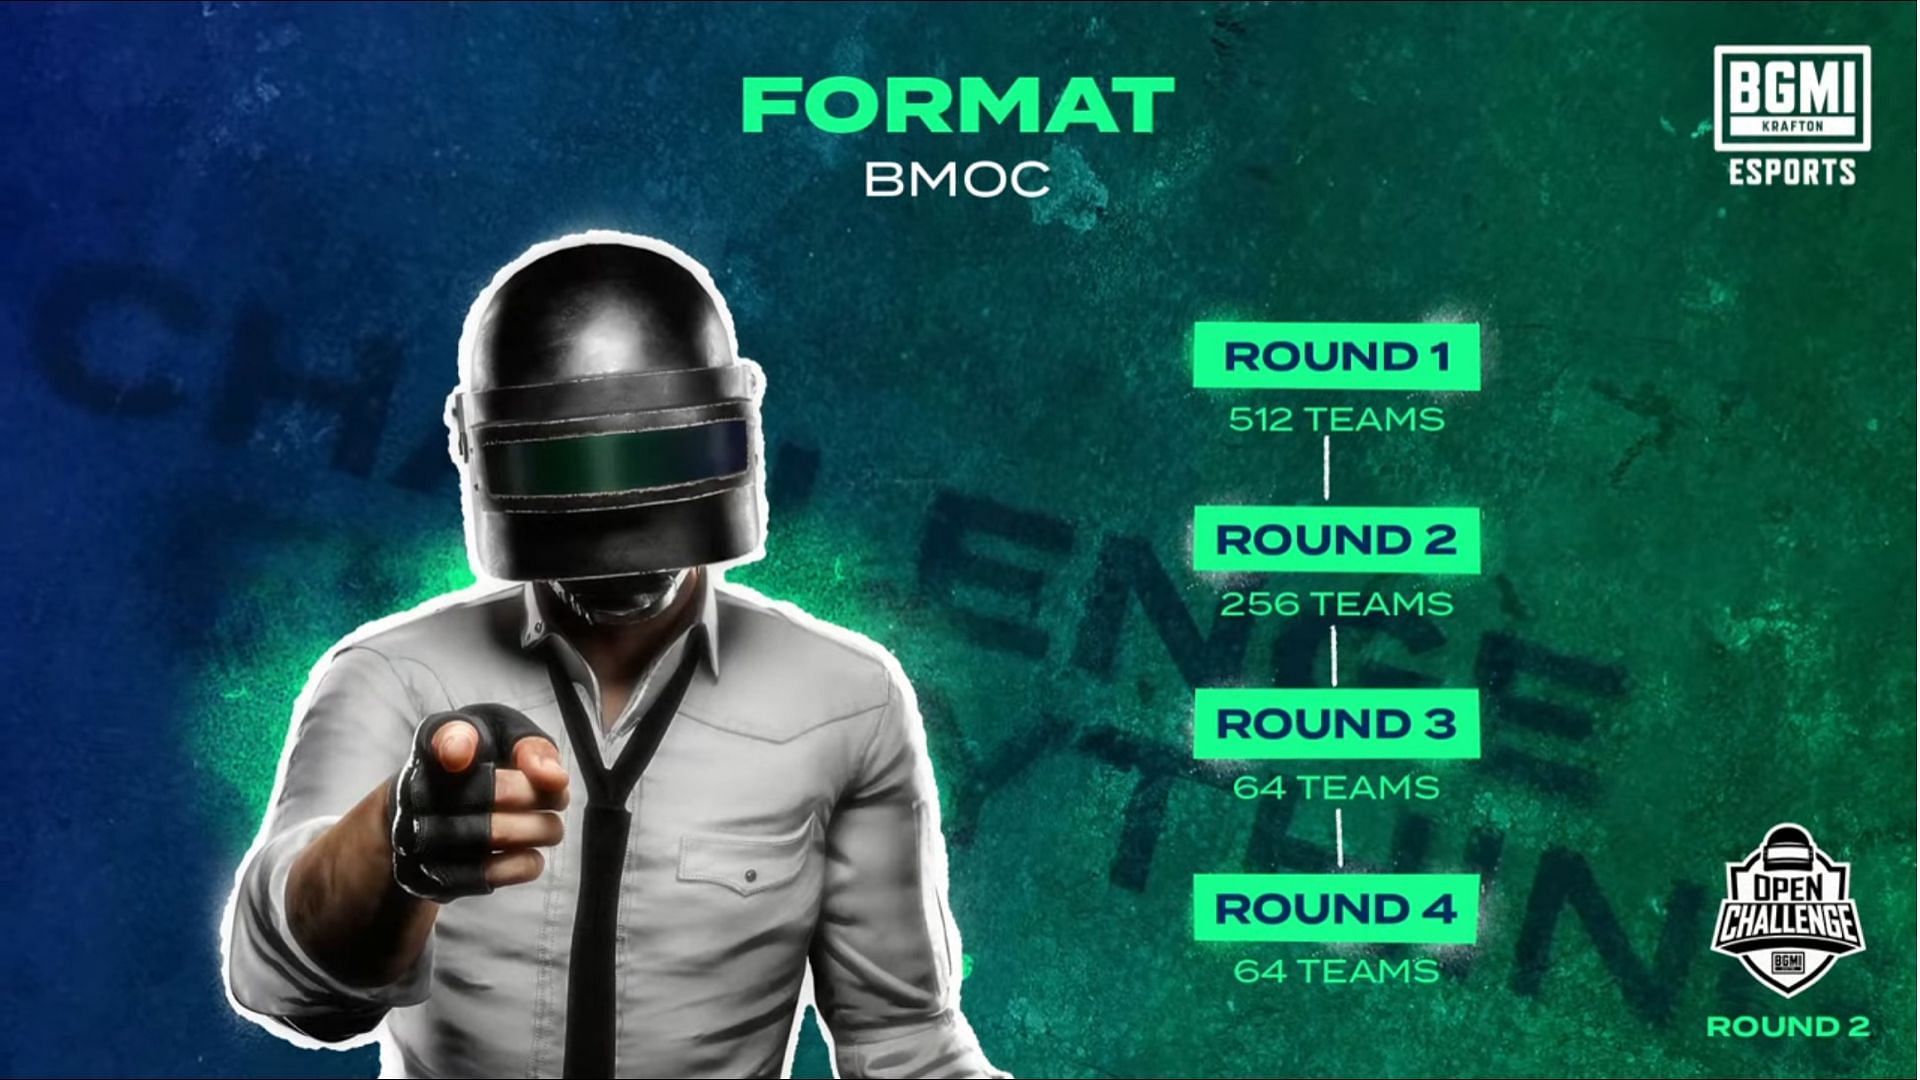 Format of BMOC Online Qualifiers (Image via BGMI)